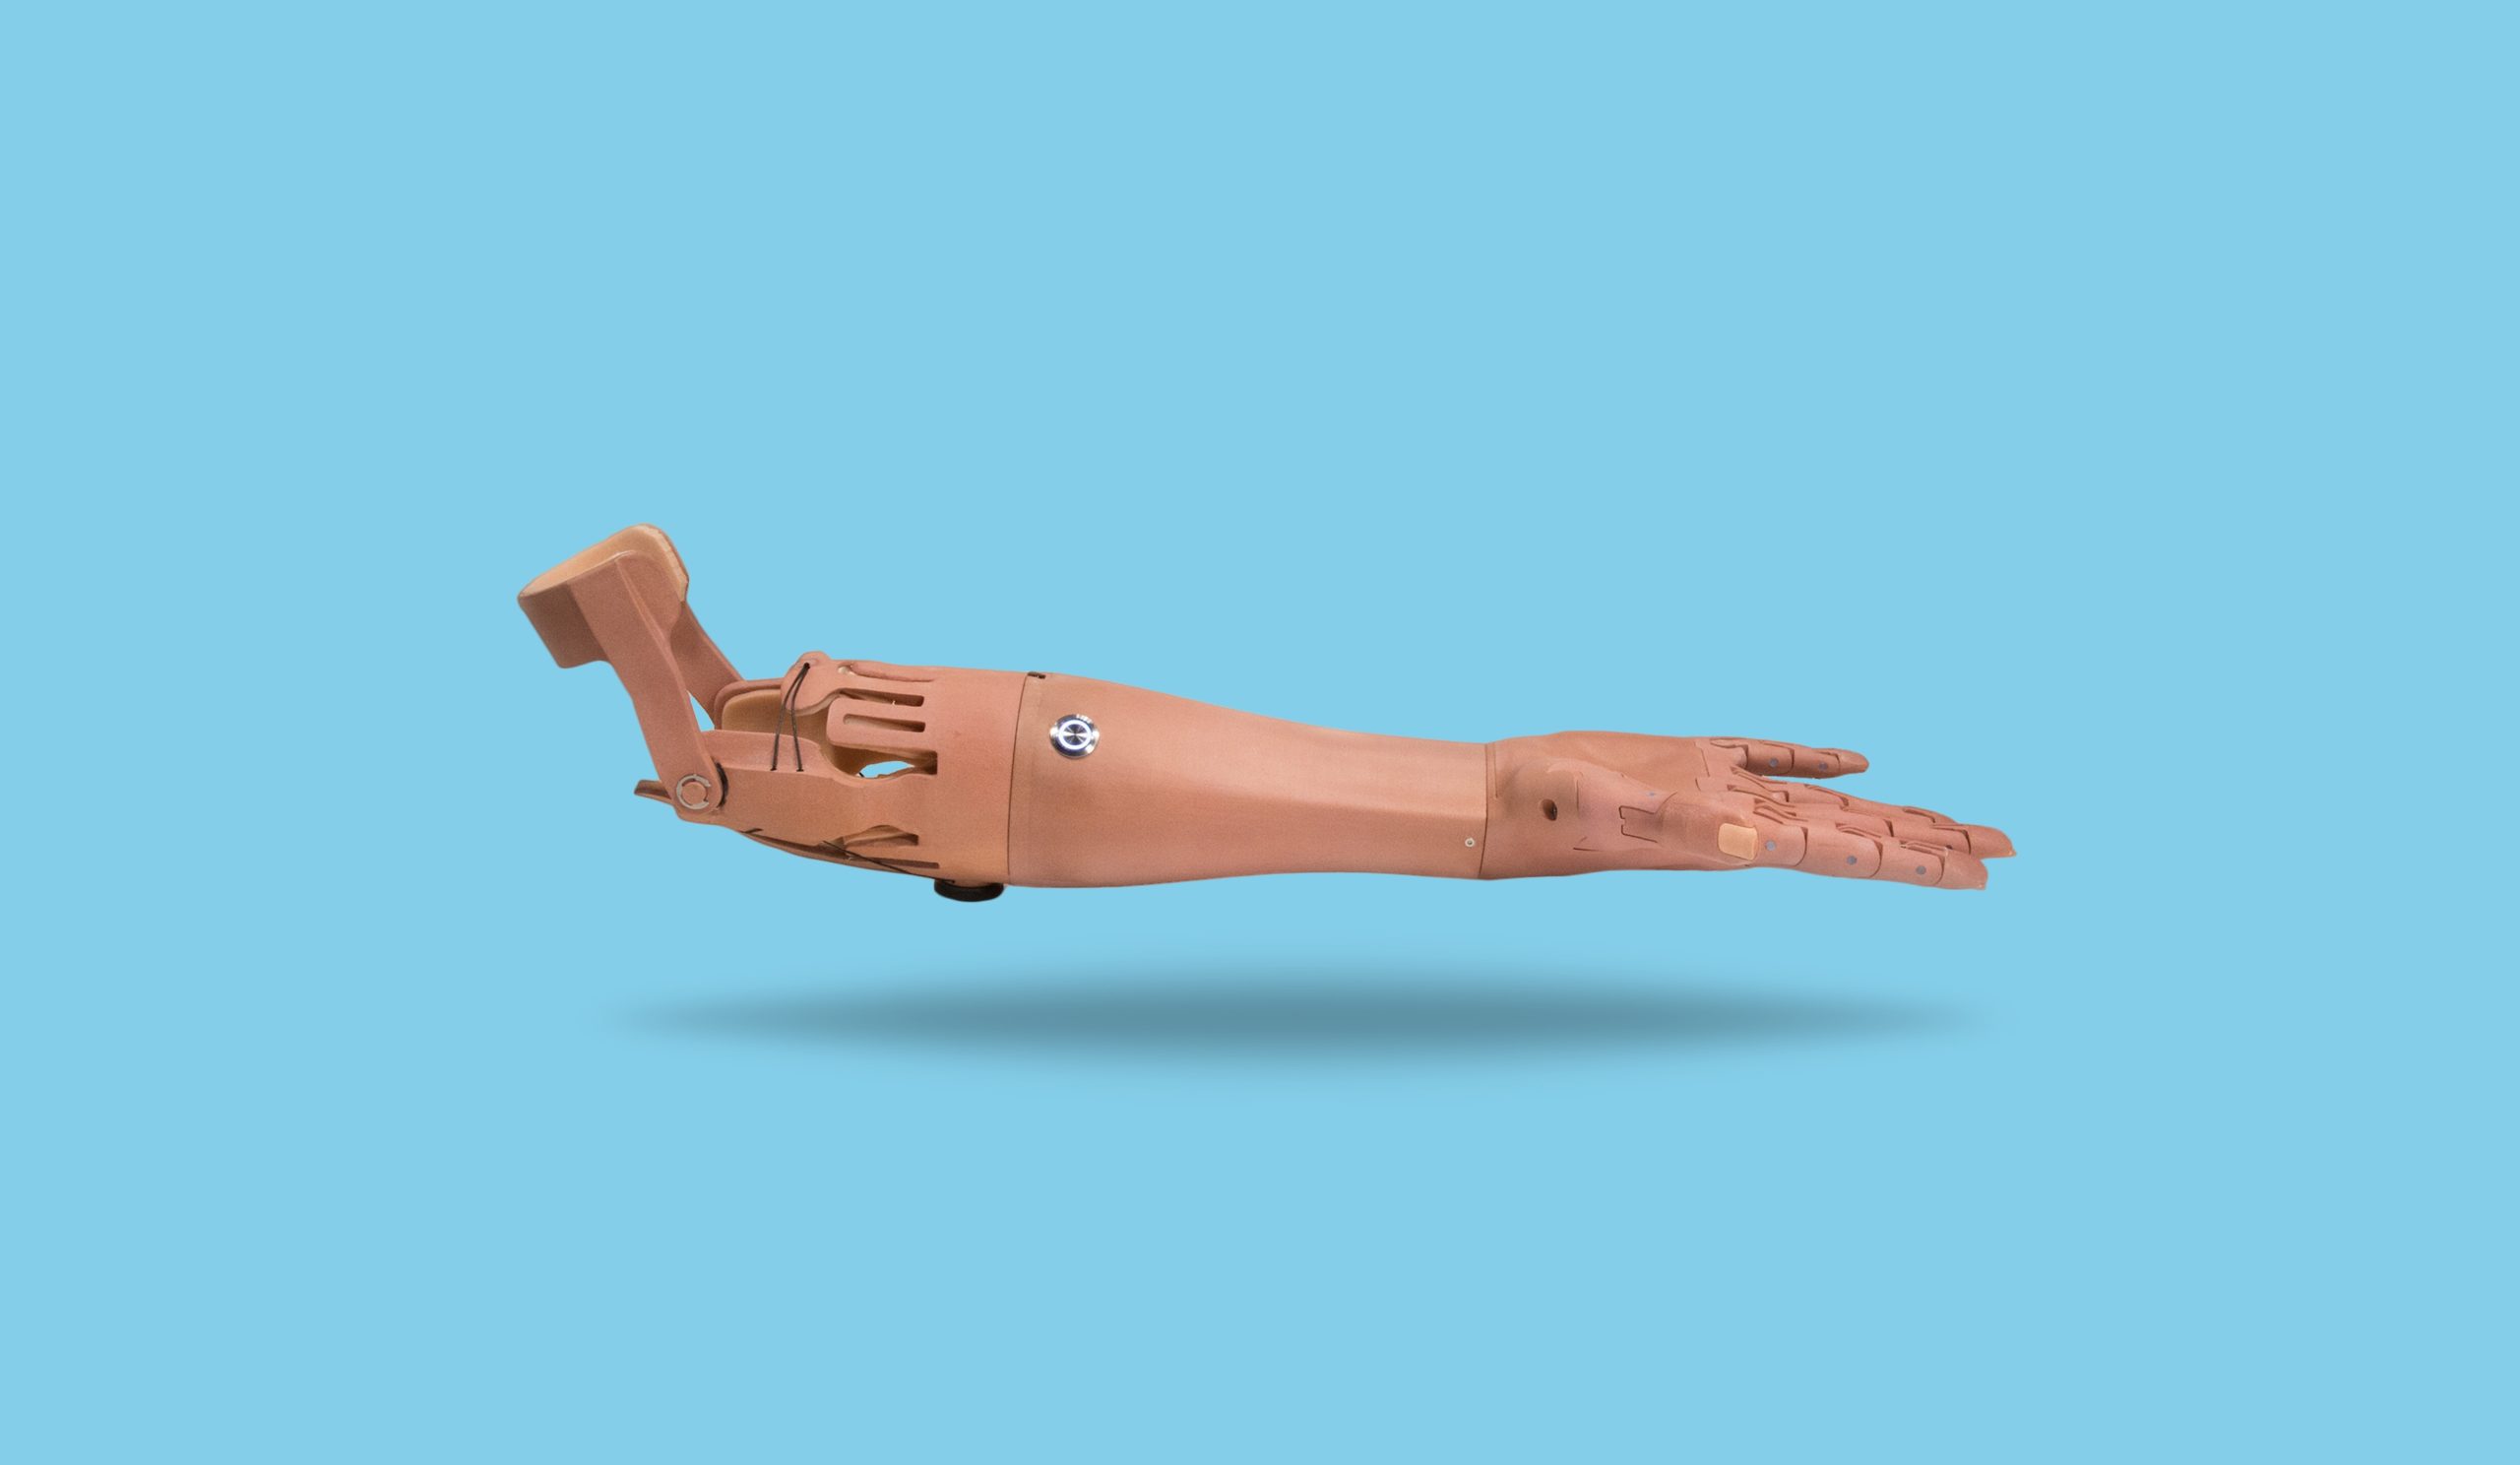 Advanced Prosthetic Arm